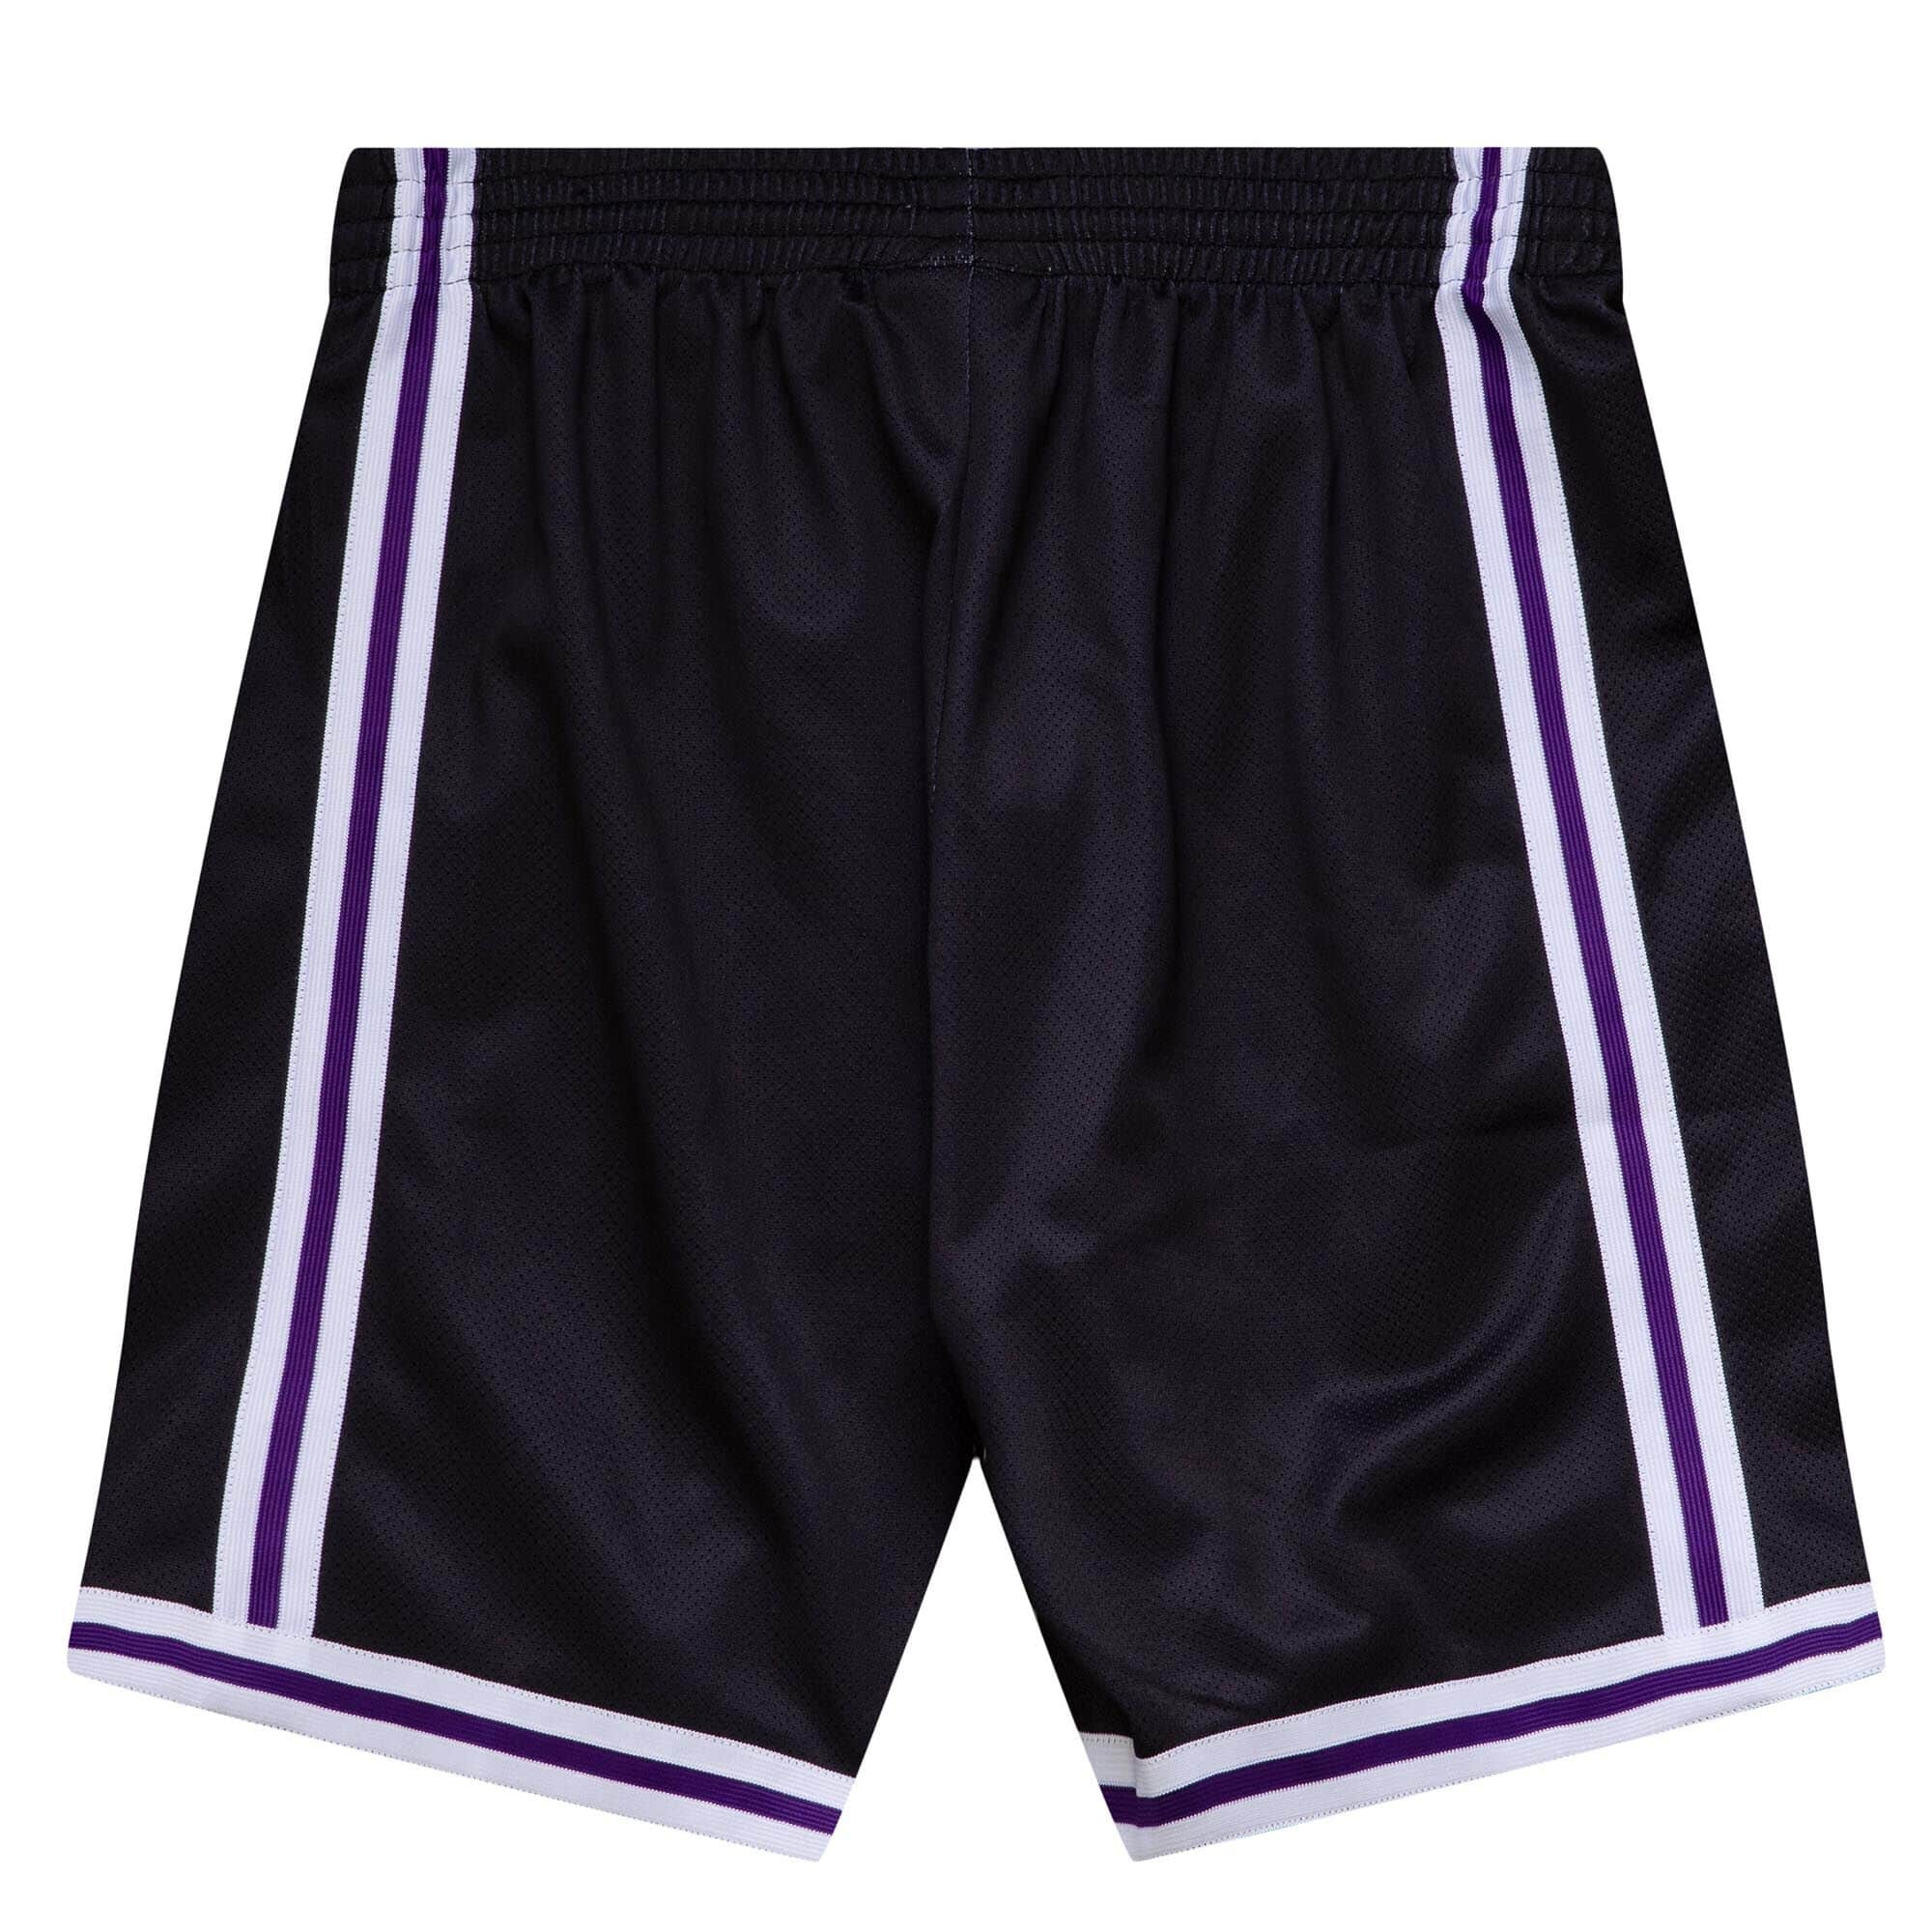 Official Washington Wizards Shorts, Basketball Shorts, Gym Shorts